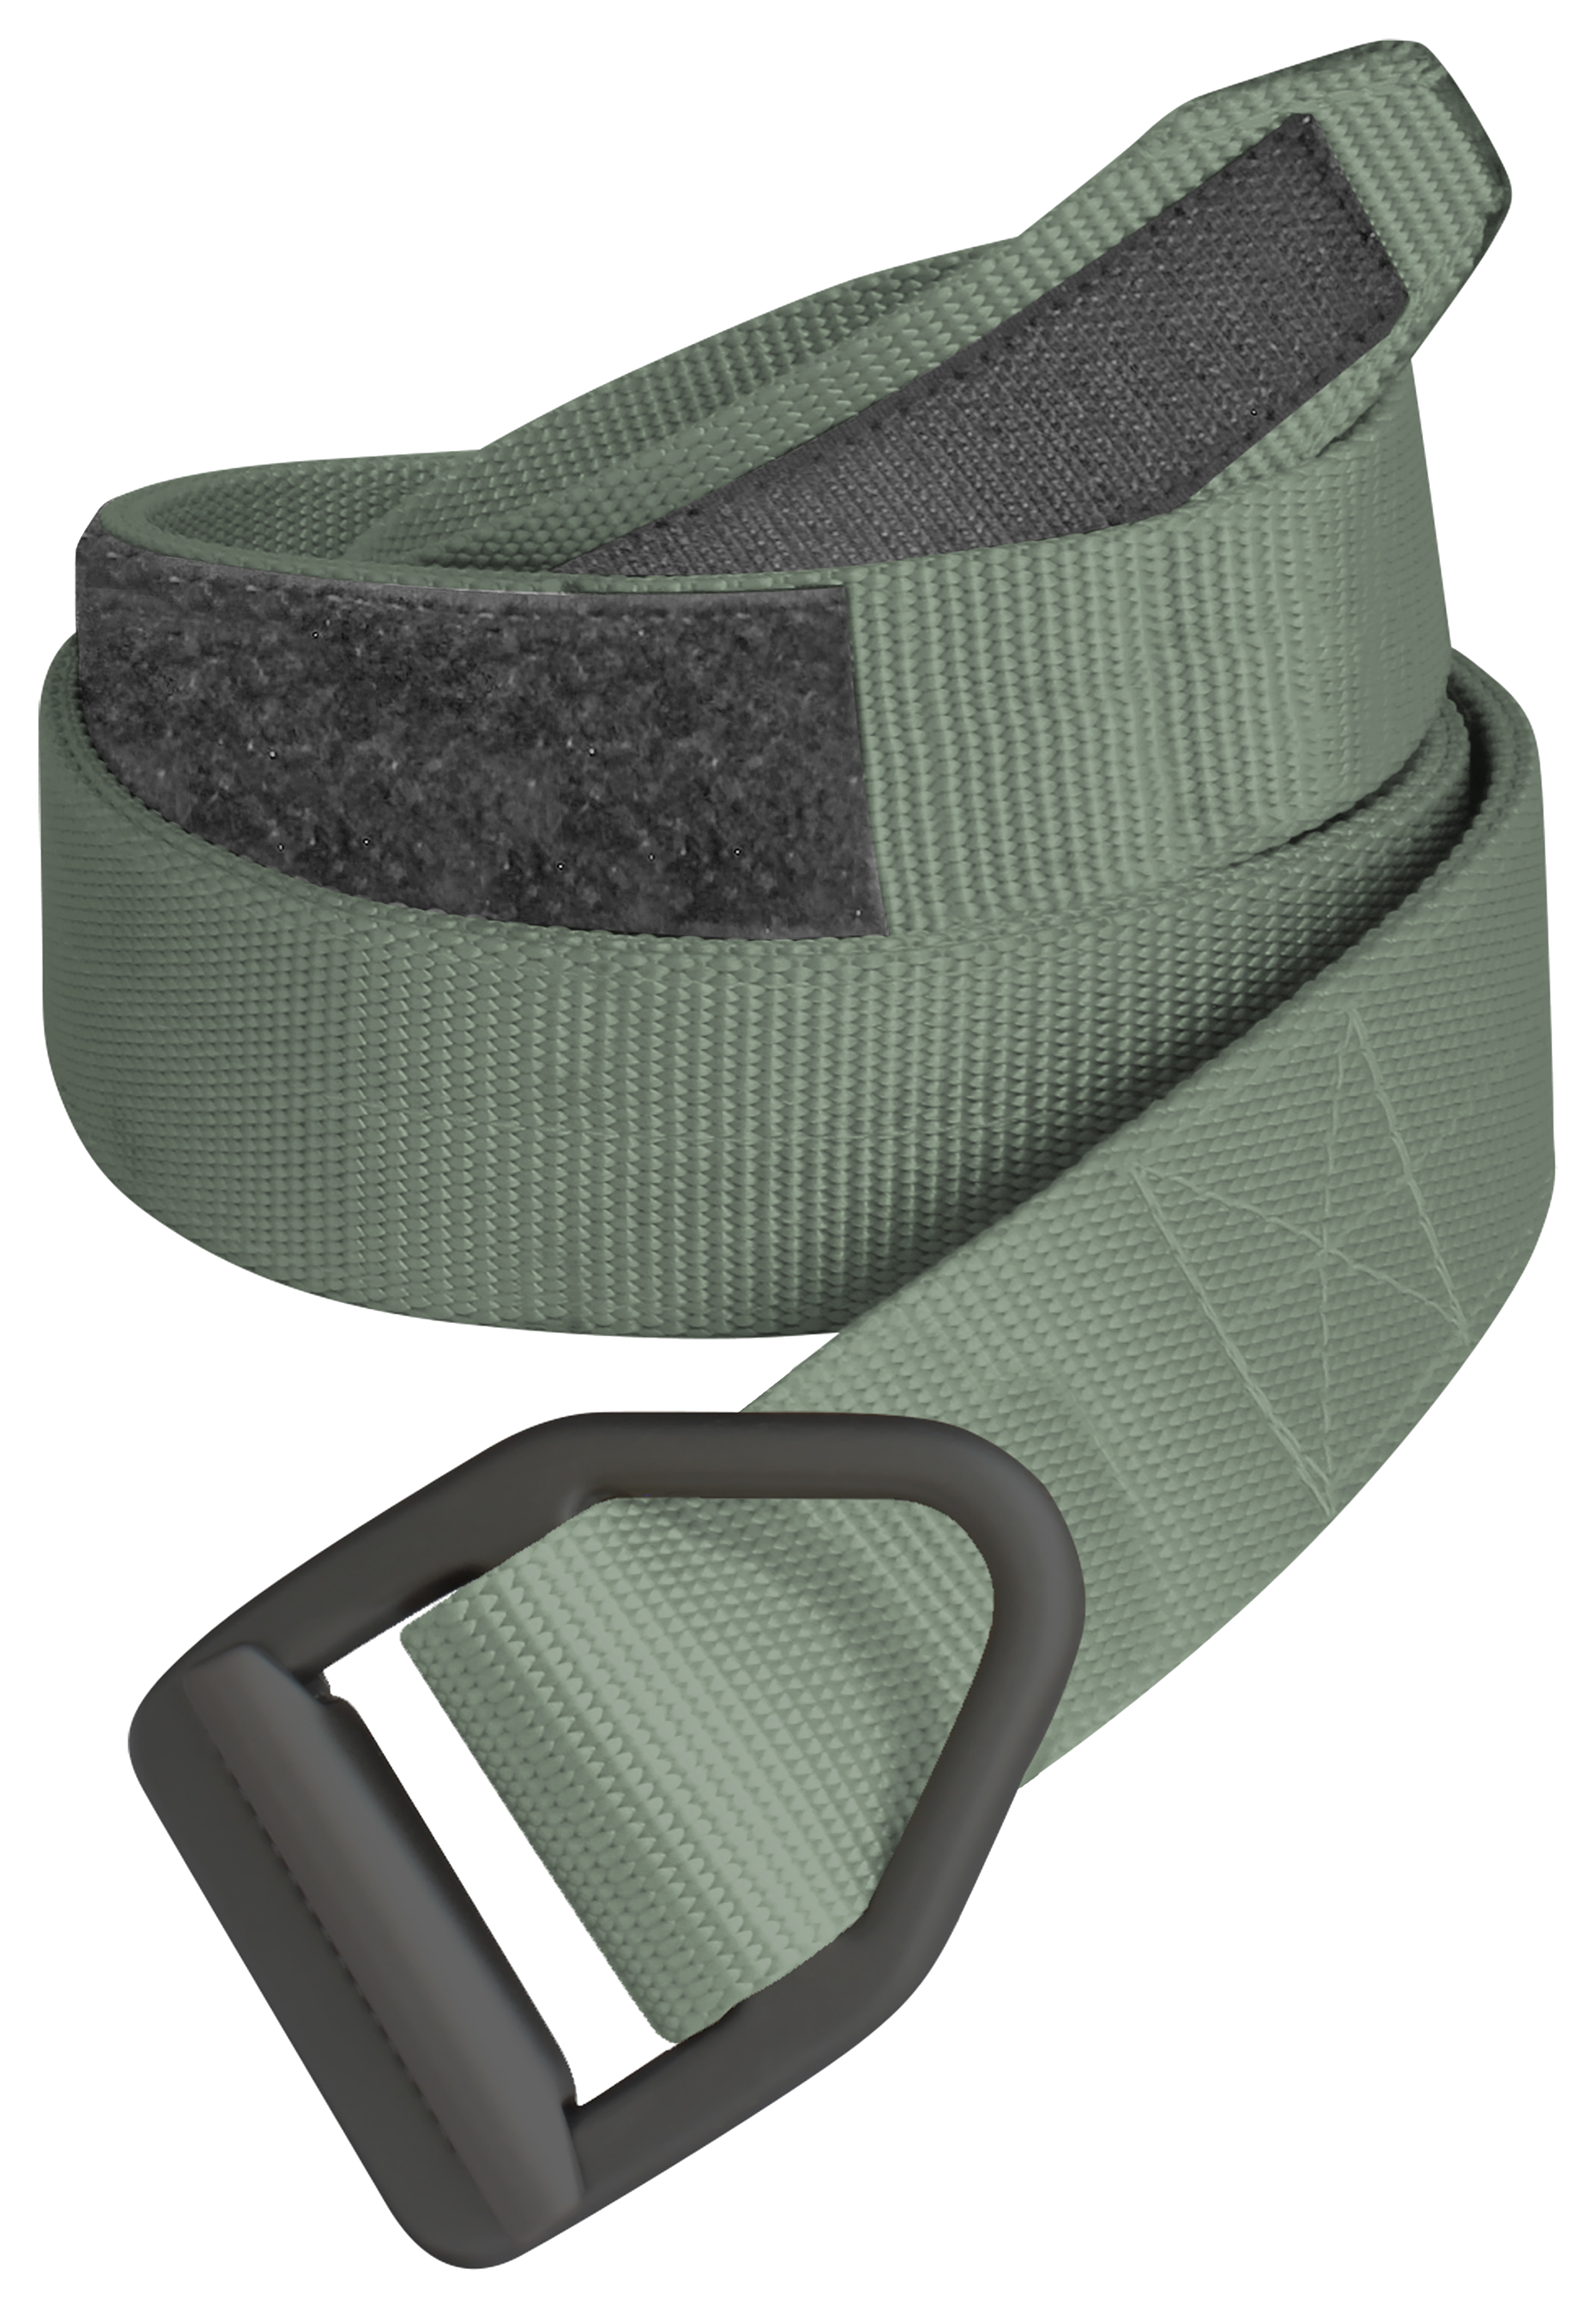 Bison Designs Last Chance Heavy-Duty Belt for Men - Olive - M